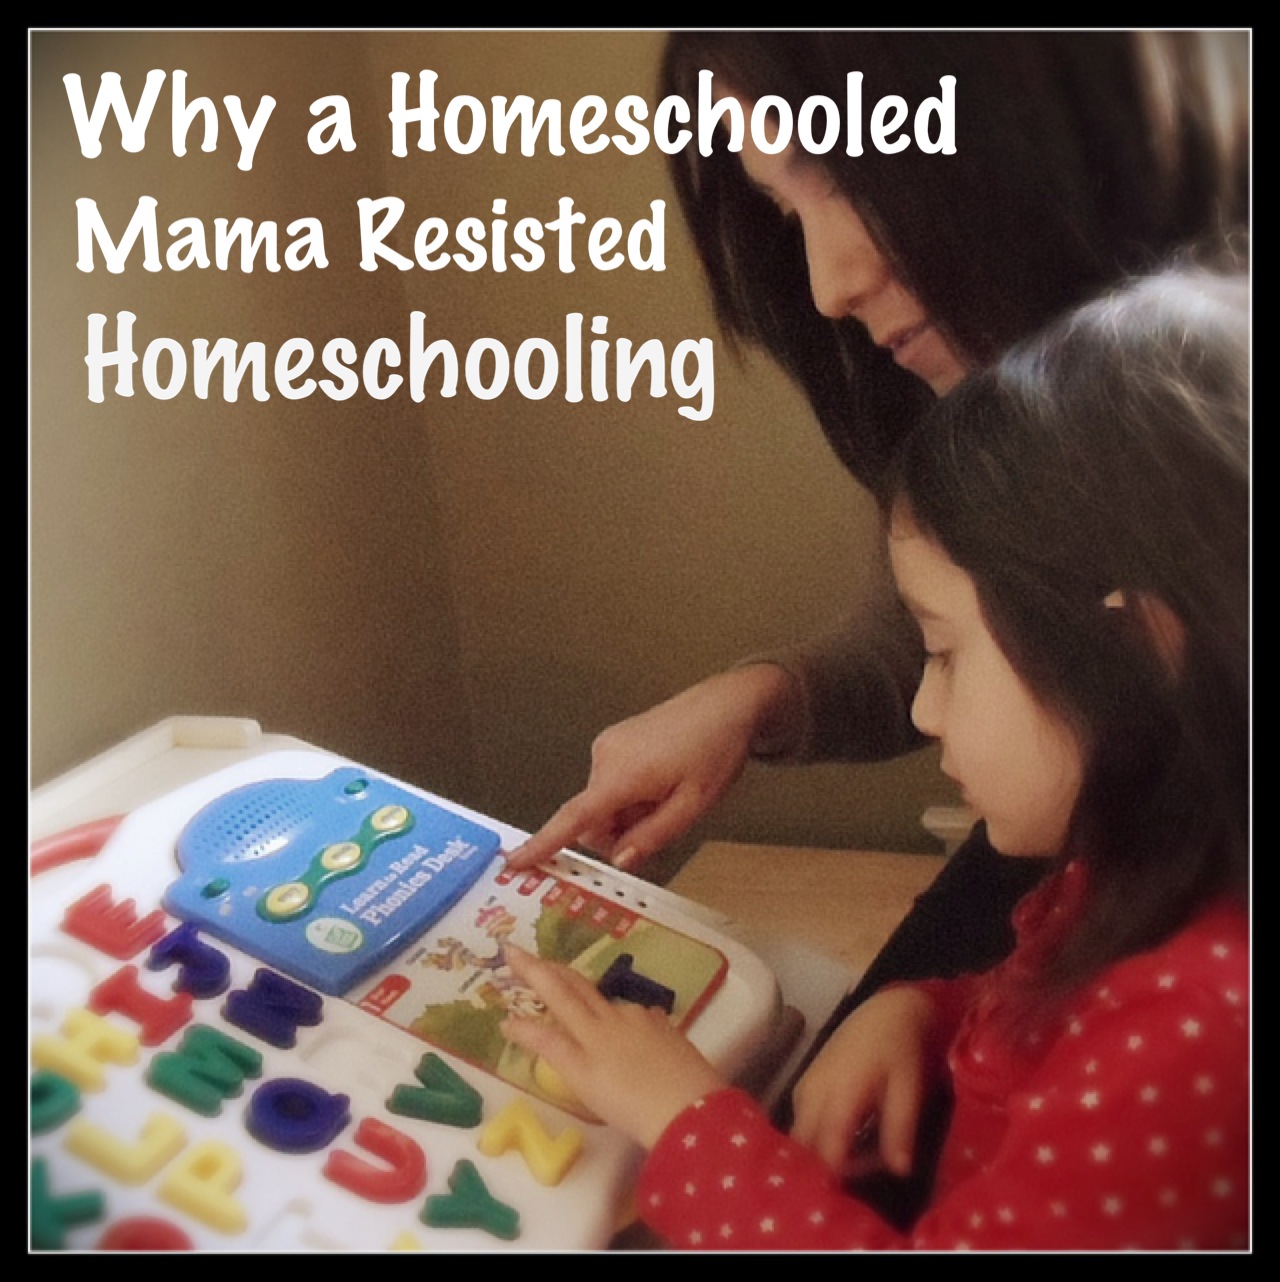 Why a Homeschooled Mama Resisted Homeschooling www.HomeschoolinMama.com @HomeschoolnMama